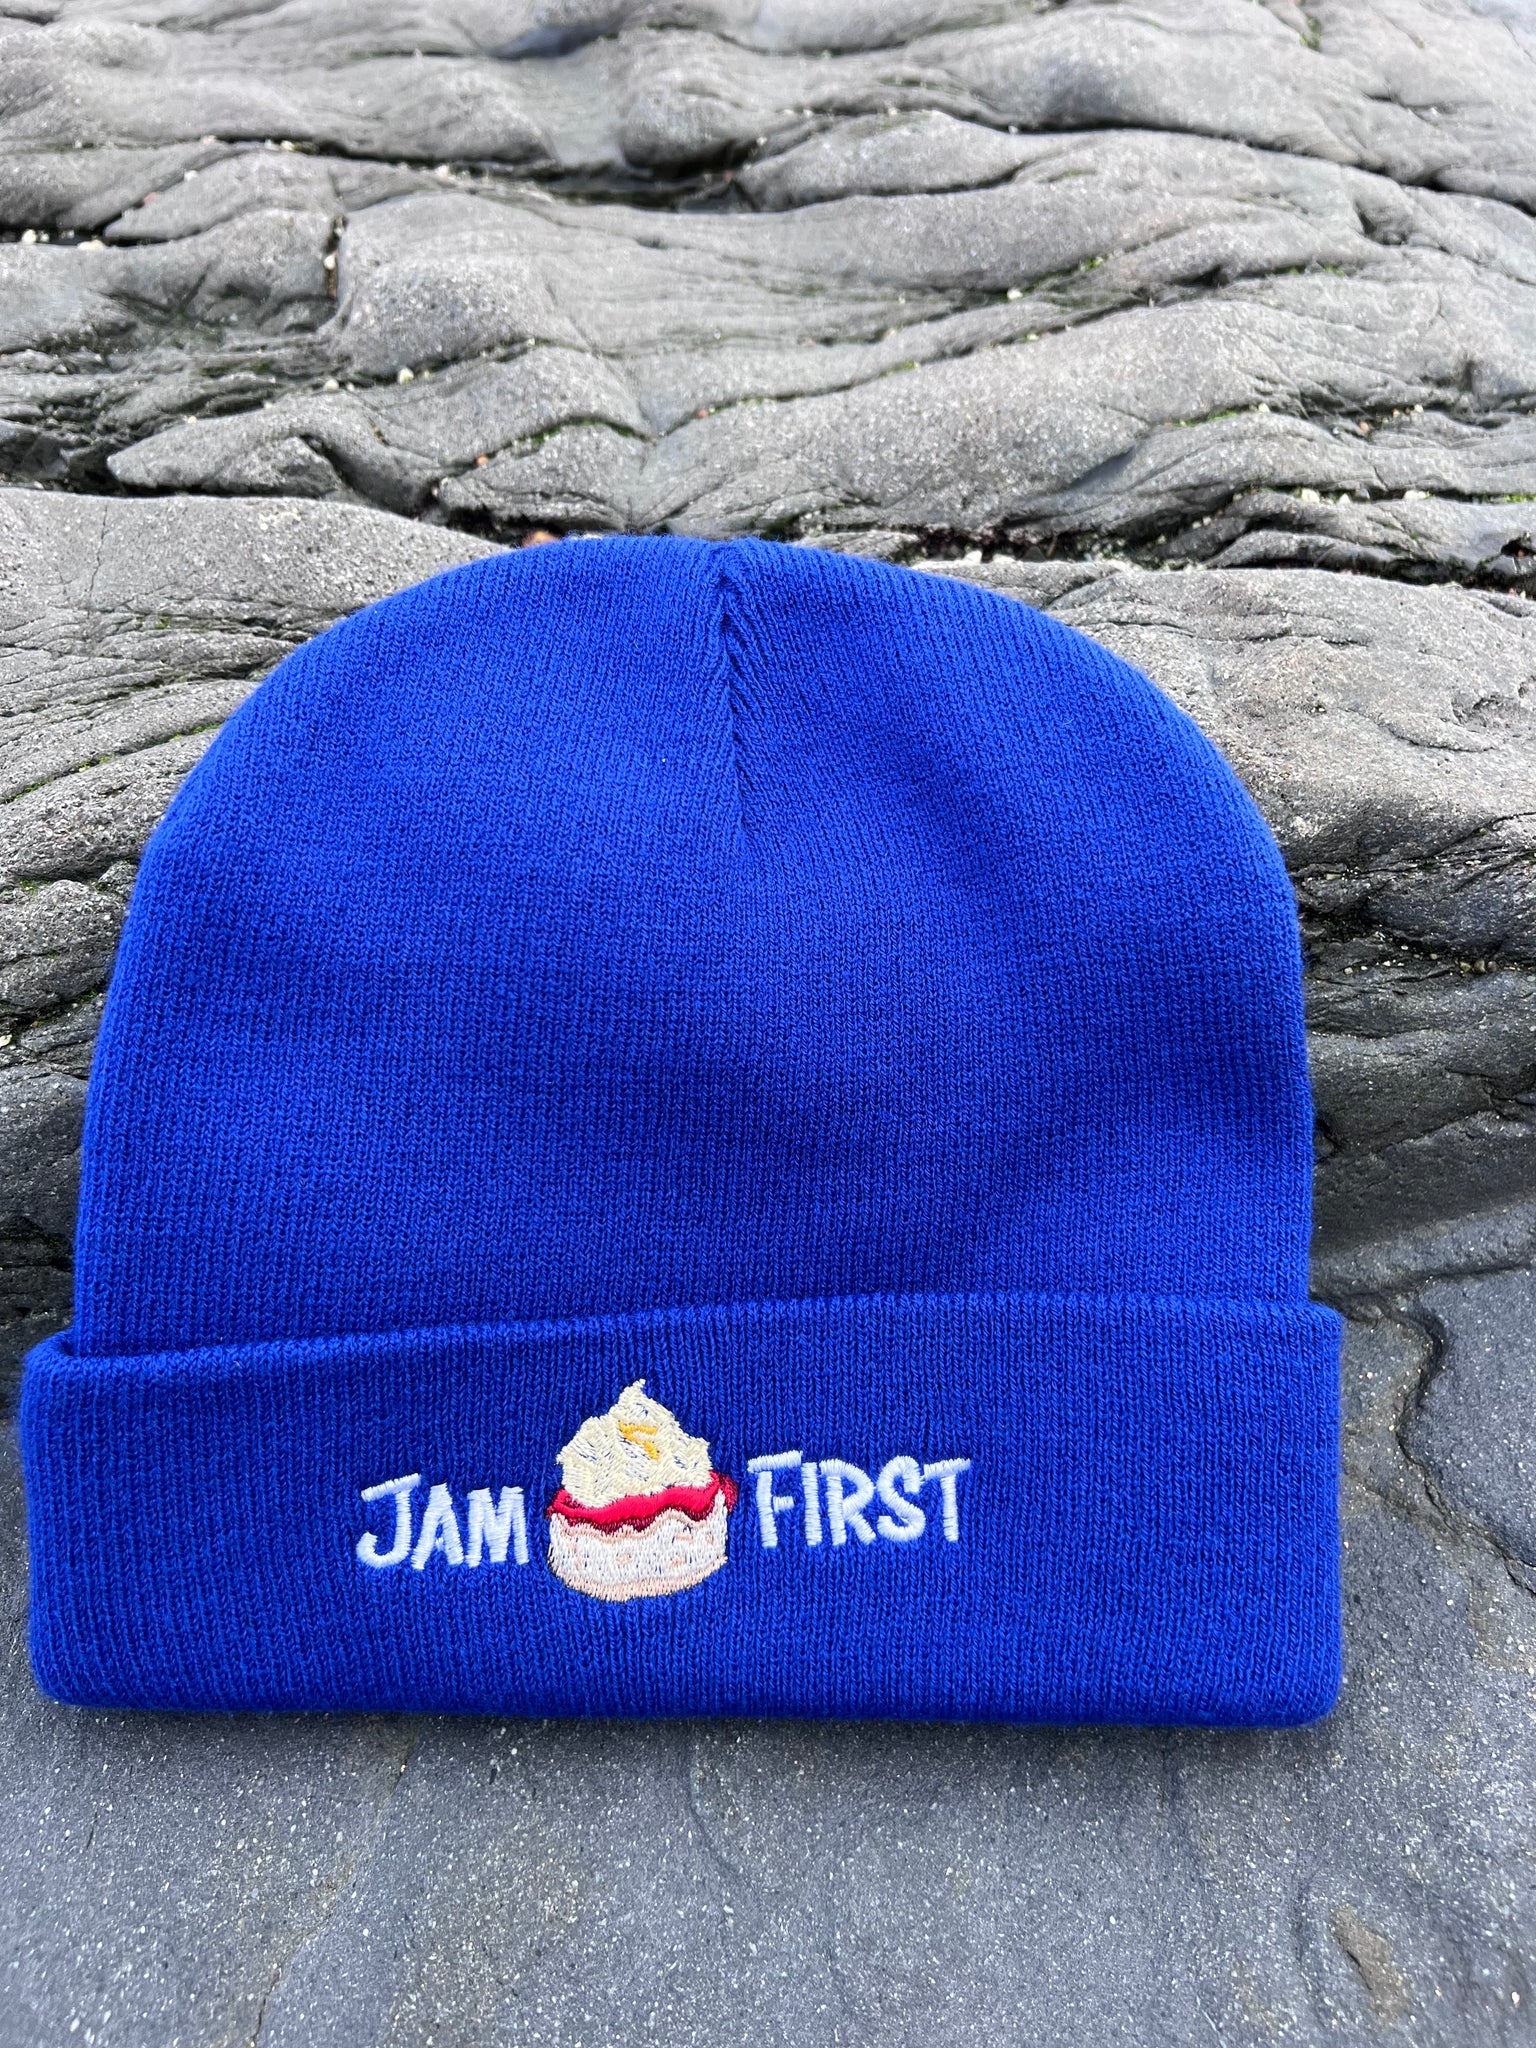 Jam First Banner Beanie Hat (Royal Blue)